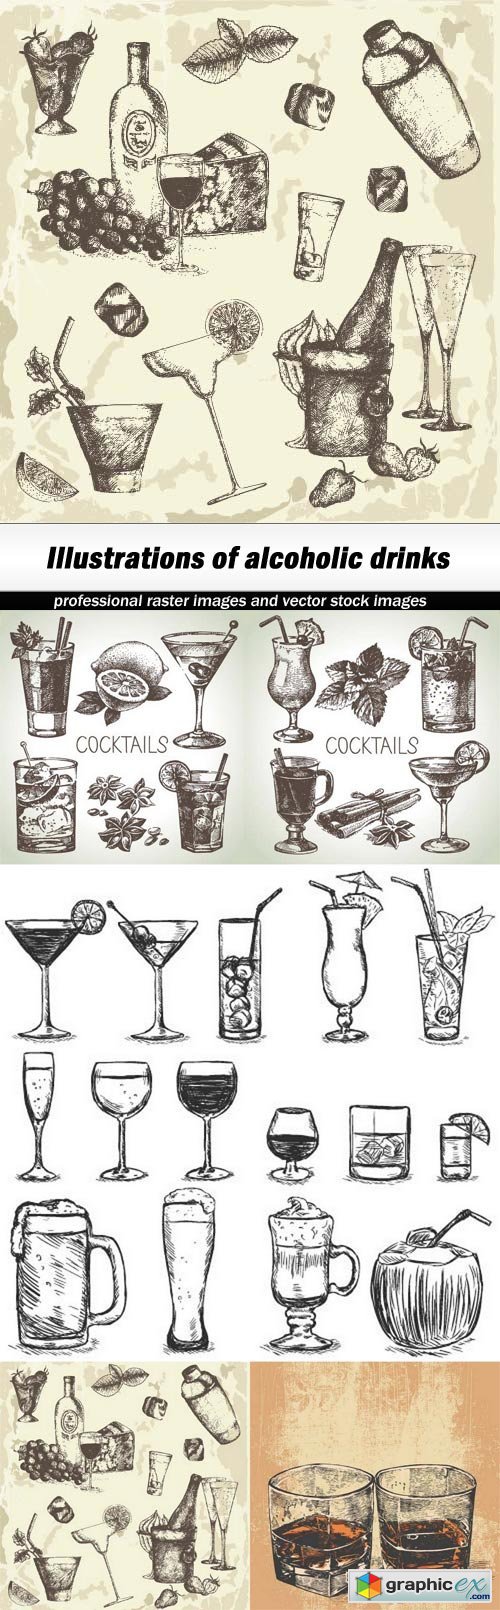 Illustrations of alcoholic drinks